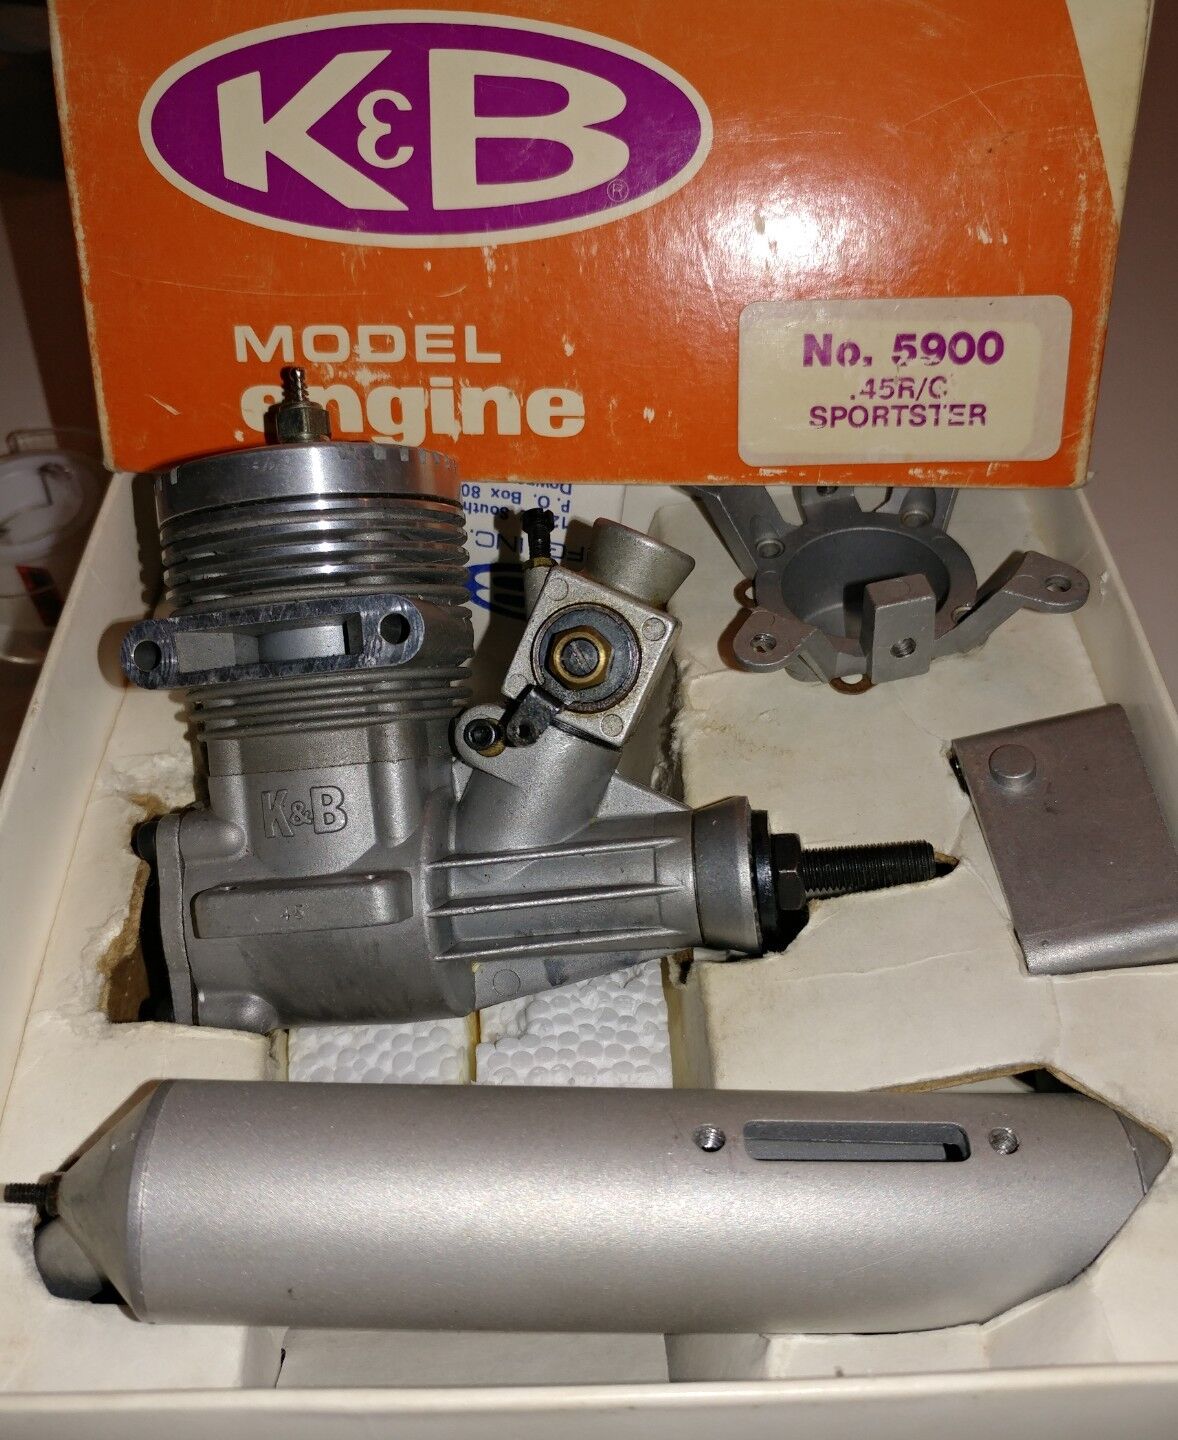 K&B engine - k&b 45 RC Sportster - no 5900 - New